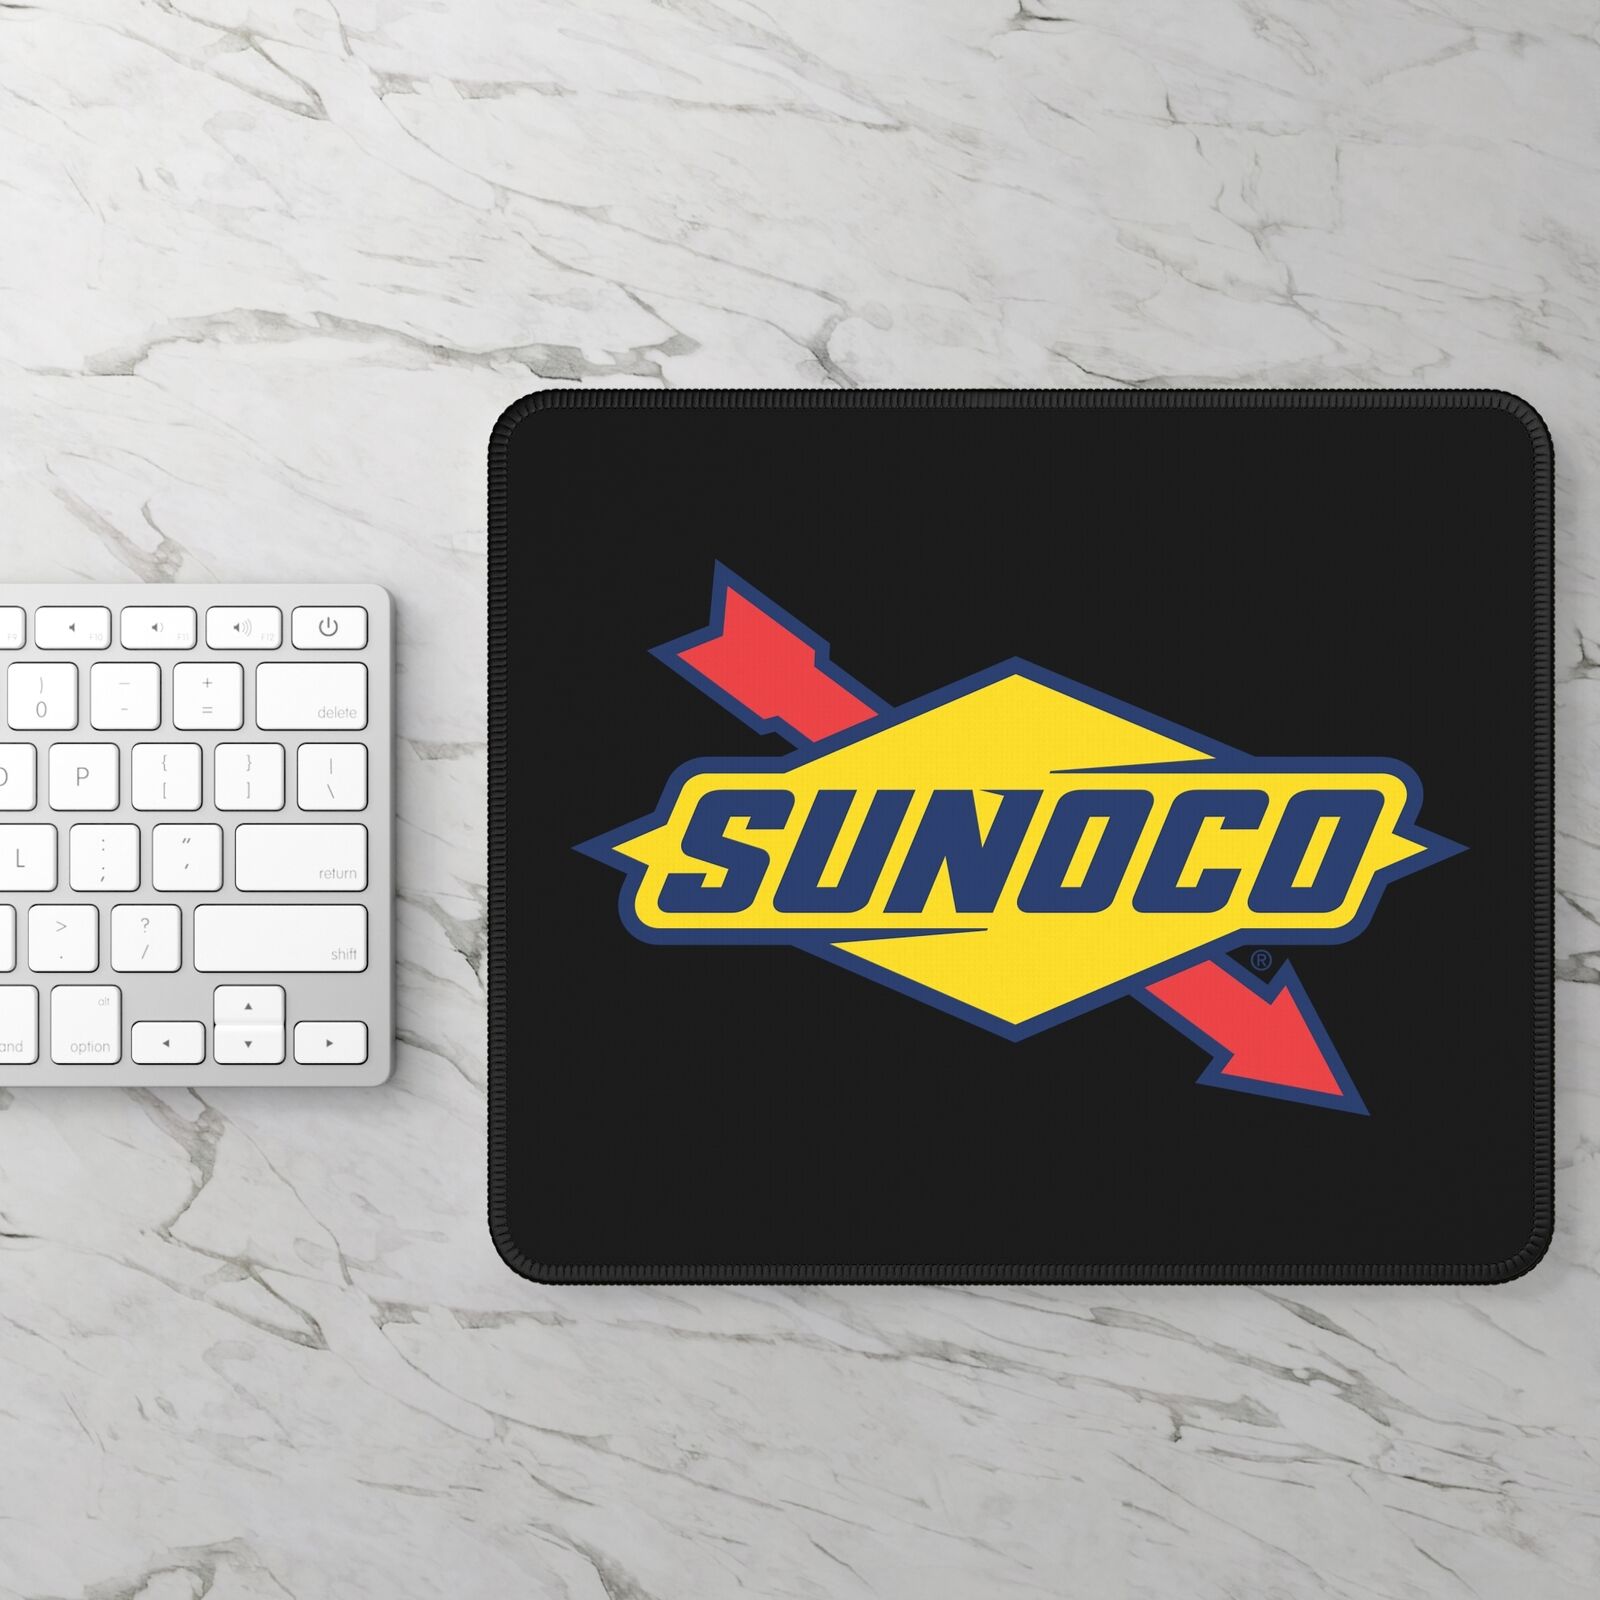 Sunoco Race Fuel NASCAR - Custom Design Quality Stitched Edges - Mouse Pad 9x7